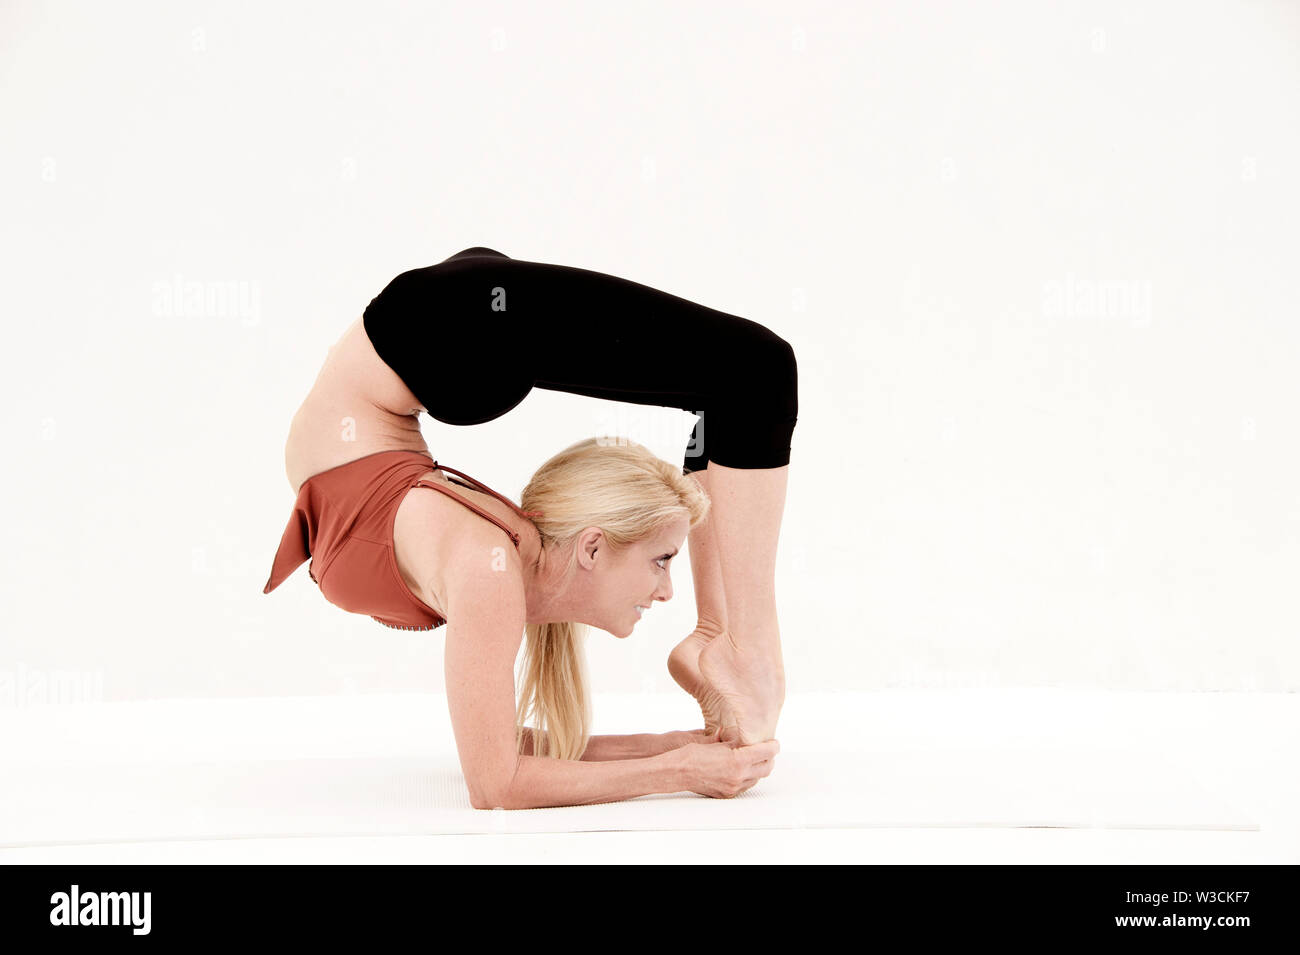 Extreme yoga: ภาพ ภาพสต็อก และรูปภาพปลอดค่าลิขสิทธิ์ที่เยี่ยมที่สุด